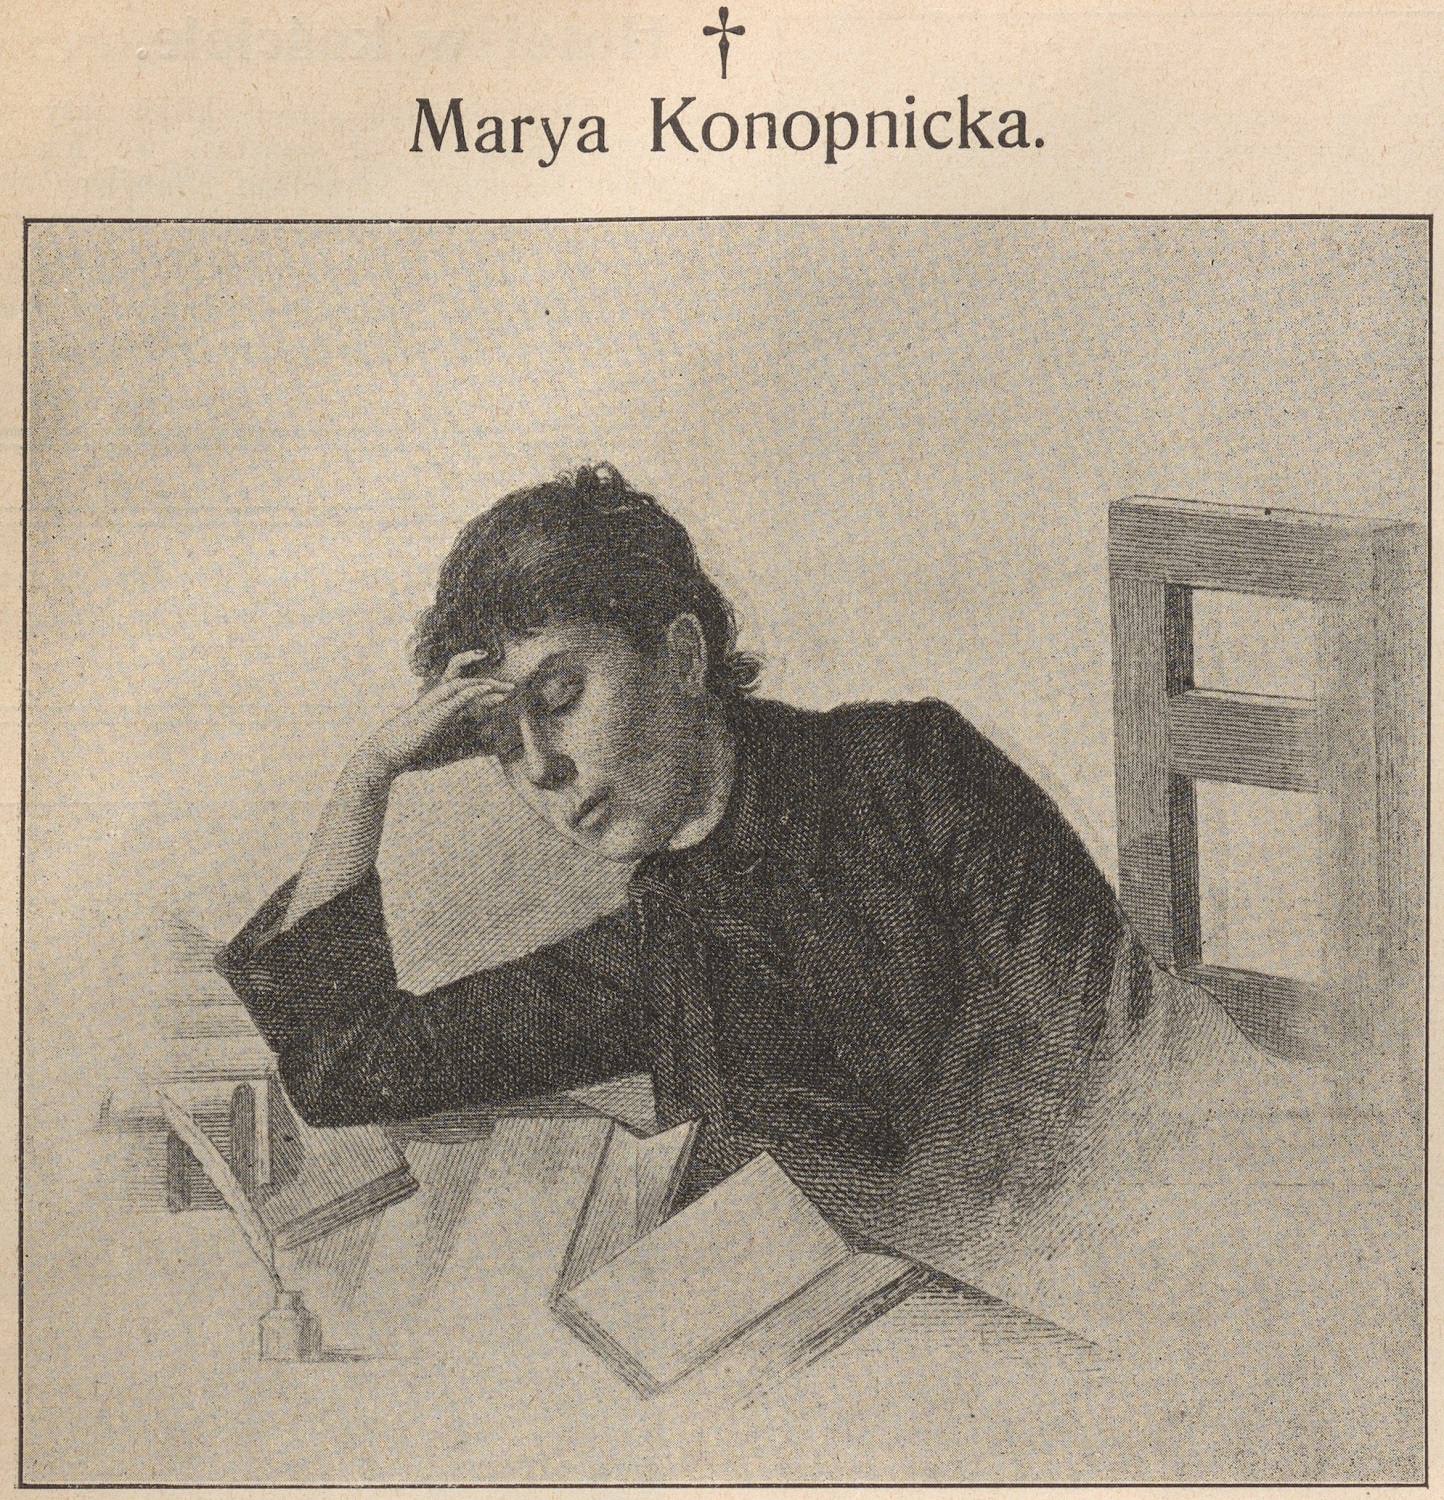 Marya Konopnicka. Portrait for the obituary in the Lviv newspaper Nasz kraj